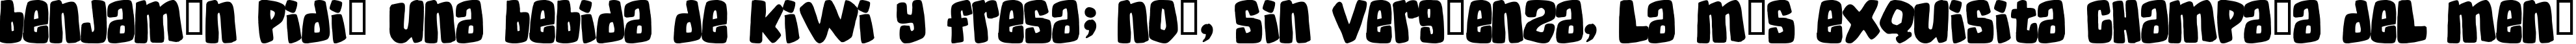 Пример написания шрифтом SkaterDudes текста на испанском